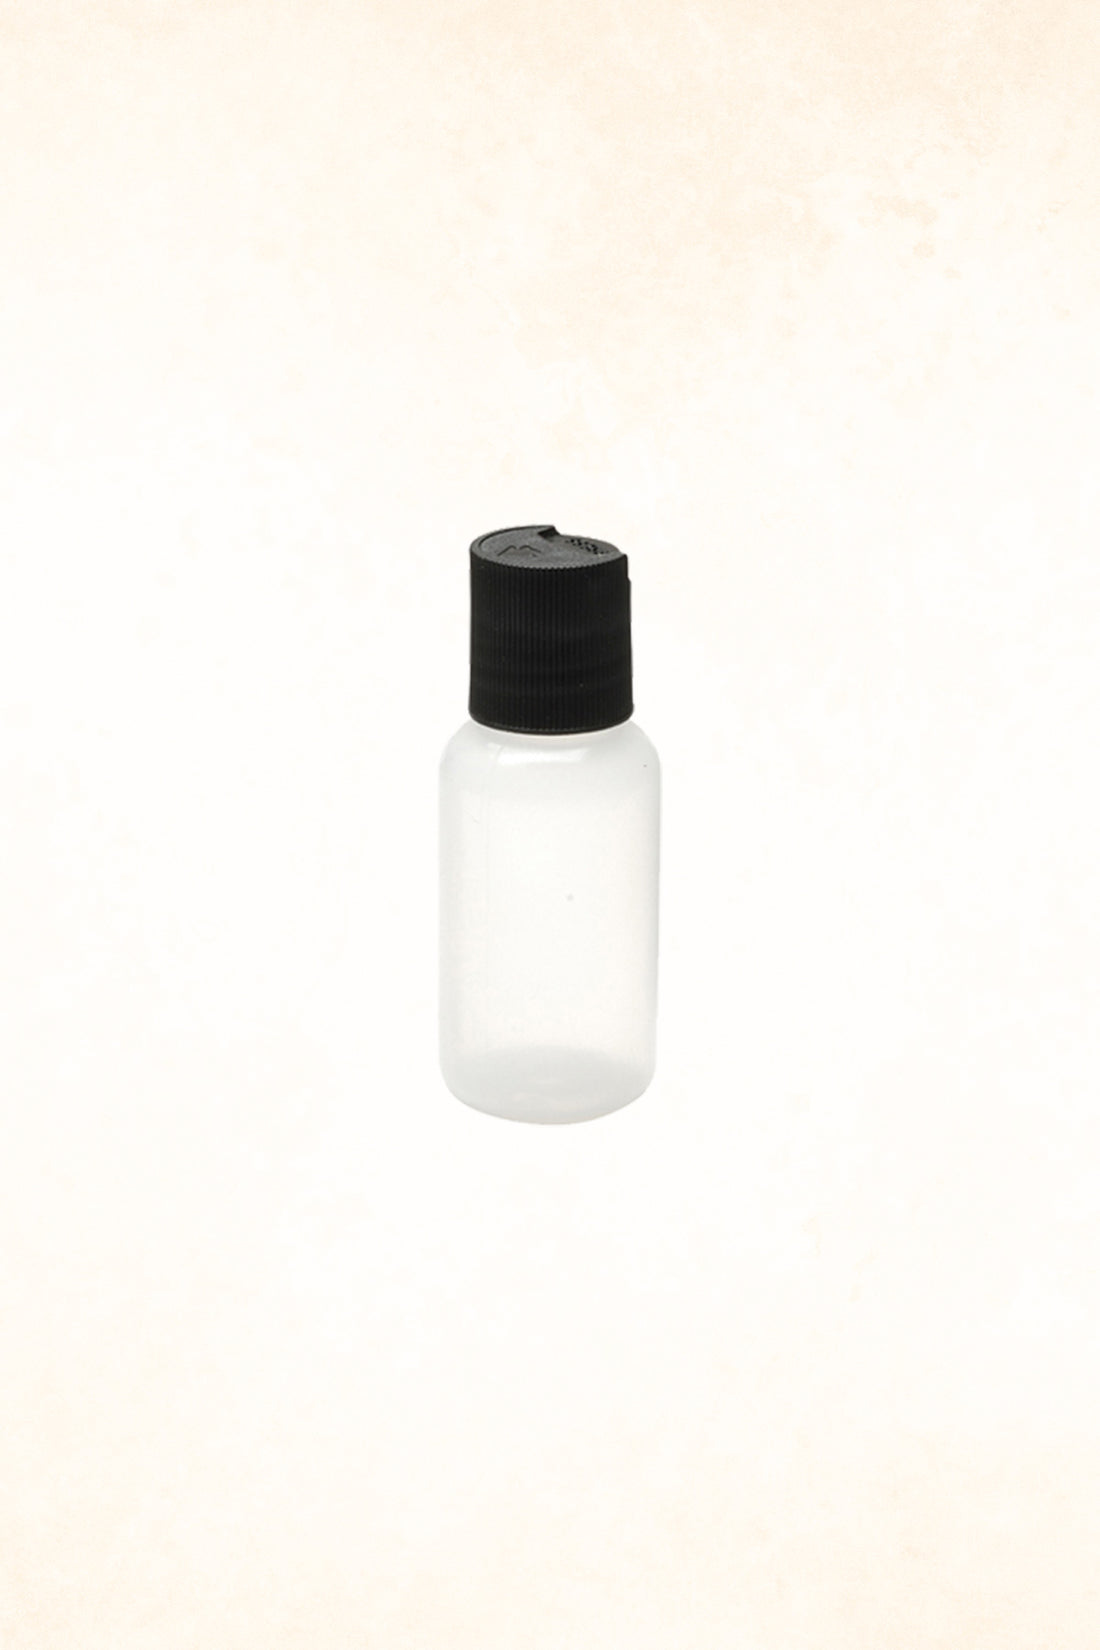 Monda Studio - Disposable Press Cap Bottle 1 oz / 28,35 Grams - MST203-1